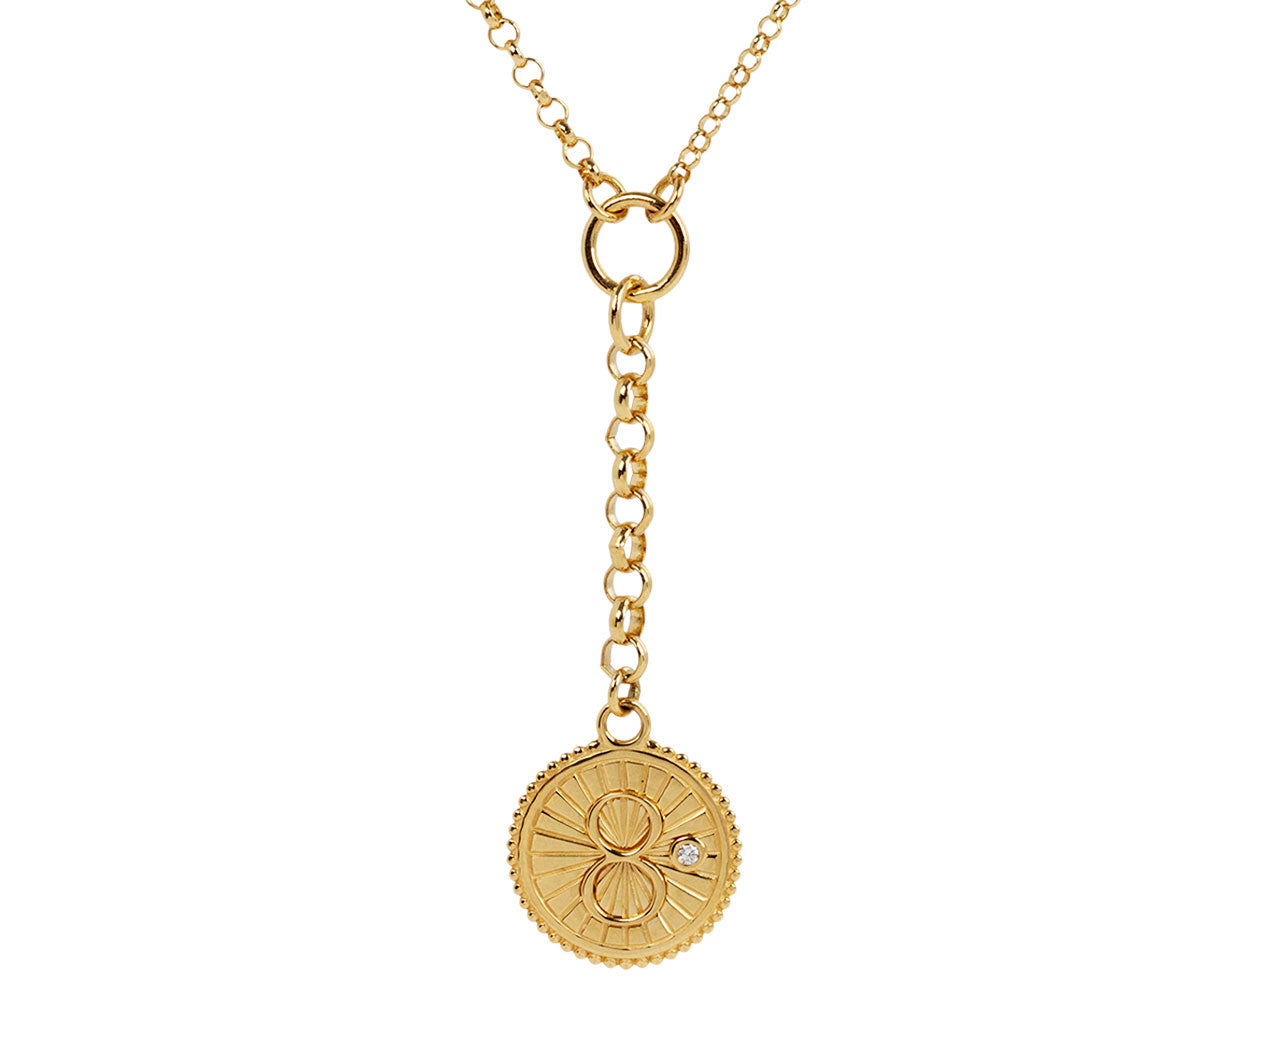 Pentagram necklace with five elements